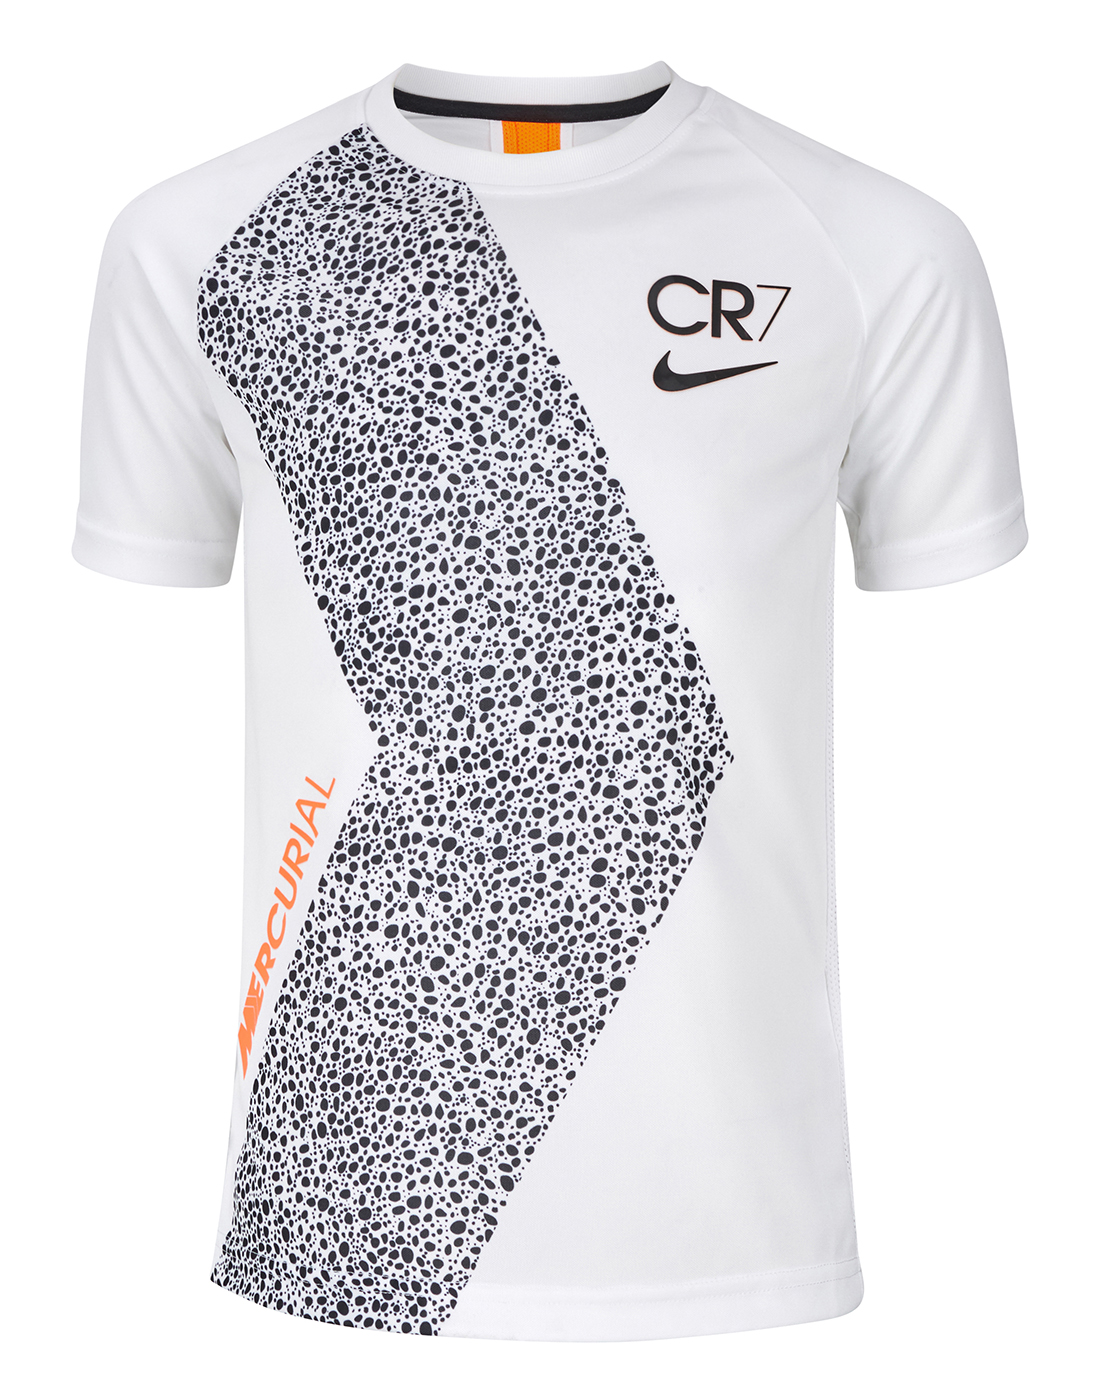 Nike Older Kids CR7 T-shirt - White | Life Style Sports UK